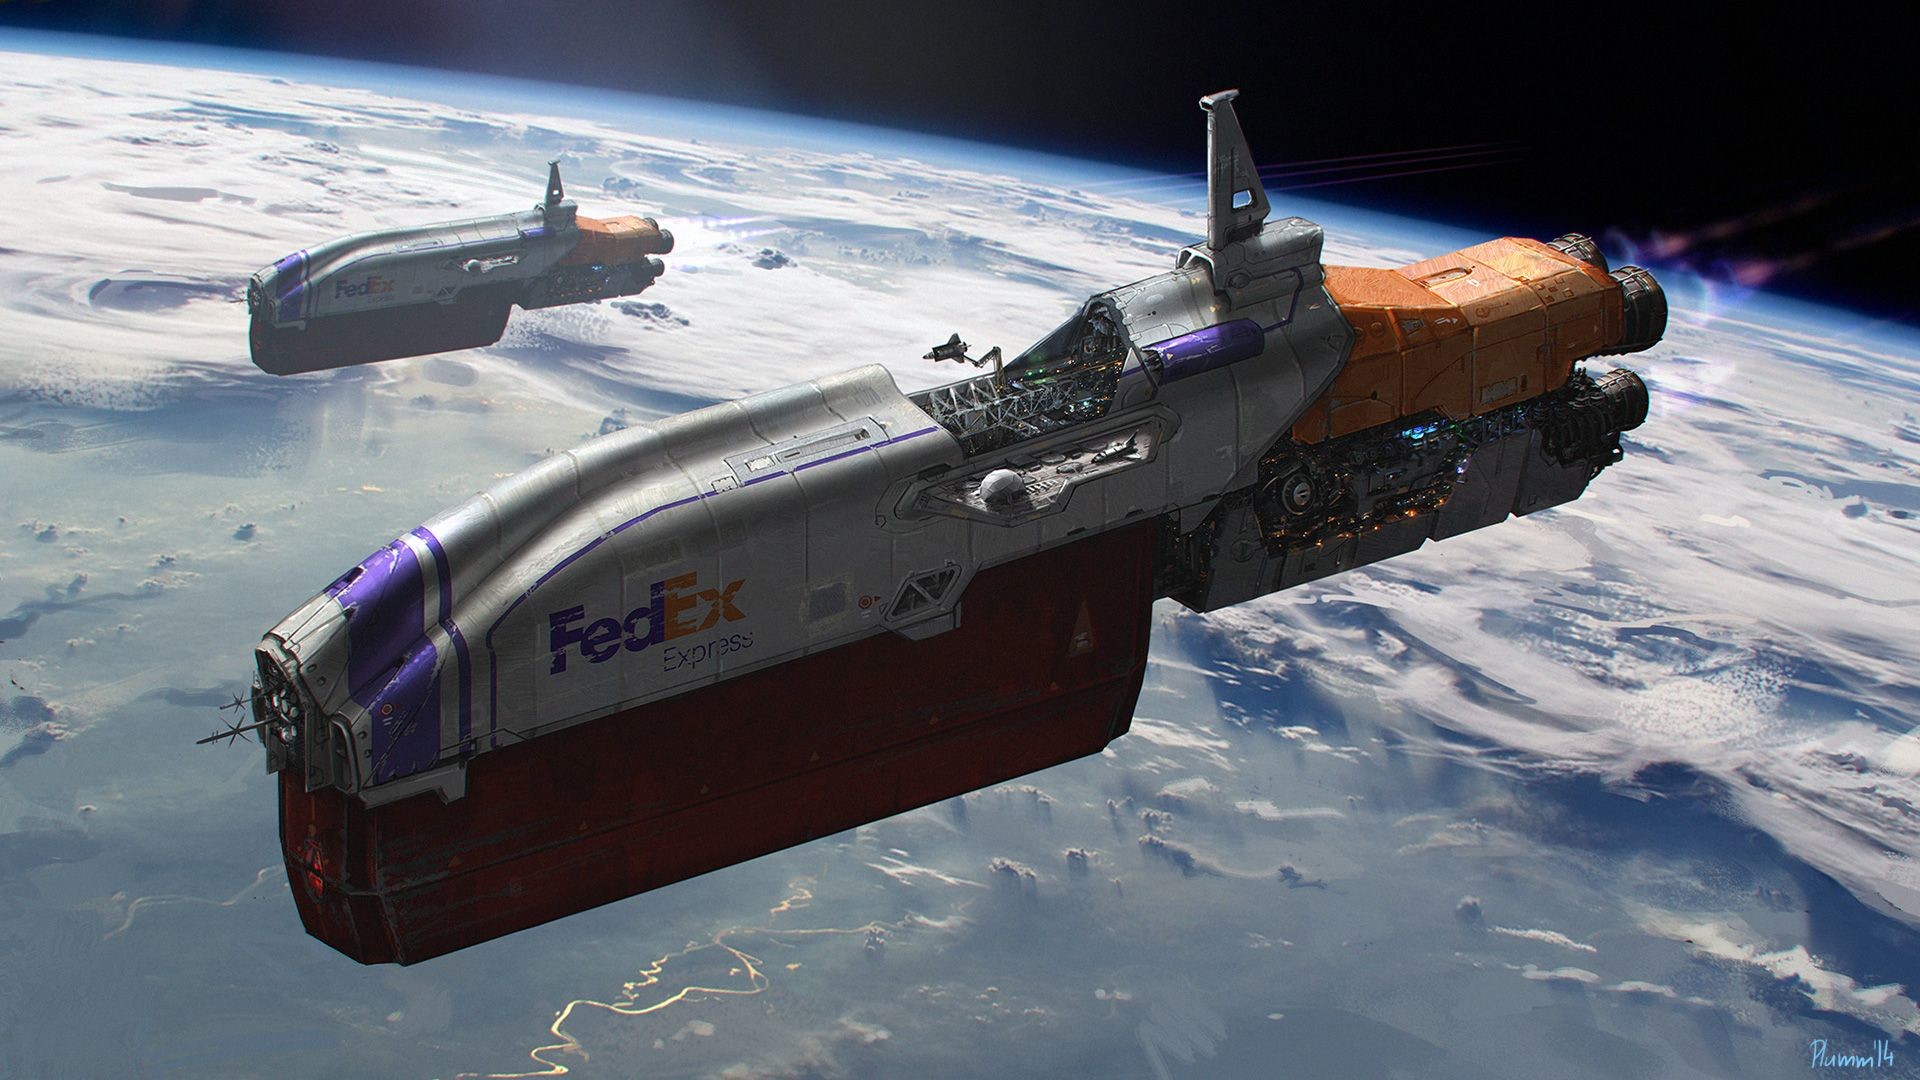 1920x1080 Futuristic Fedex Spaceship wallpaper